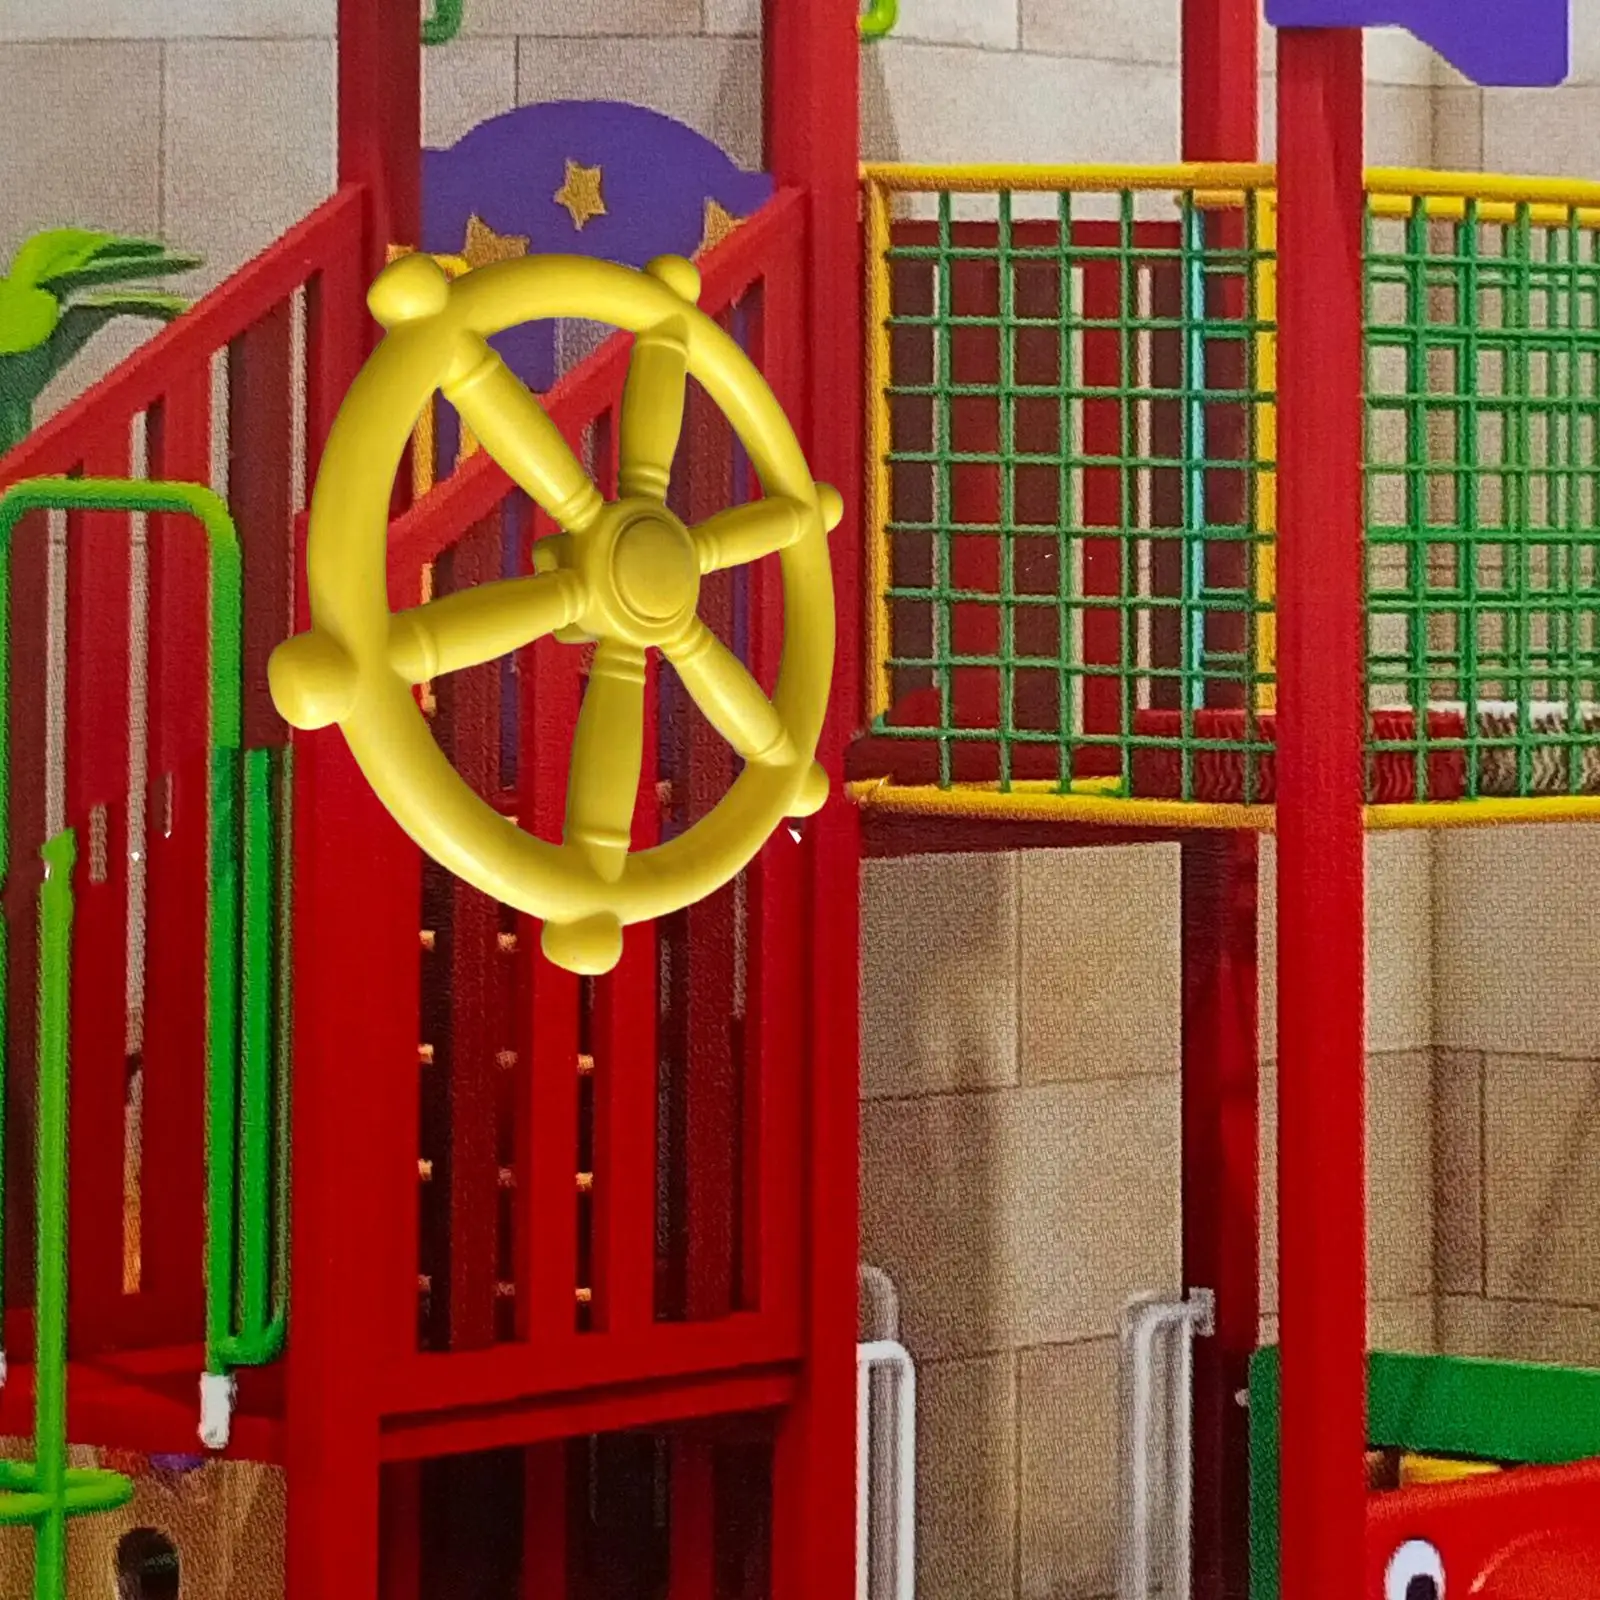 Pirate Ship Wheel Playground Equipment for Swingset Backyard Treehouse